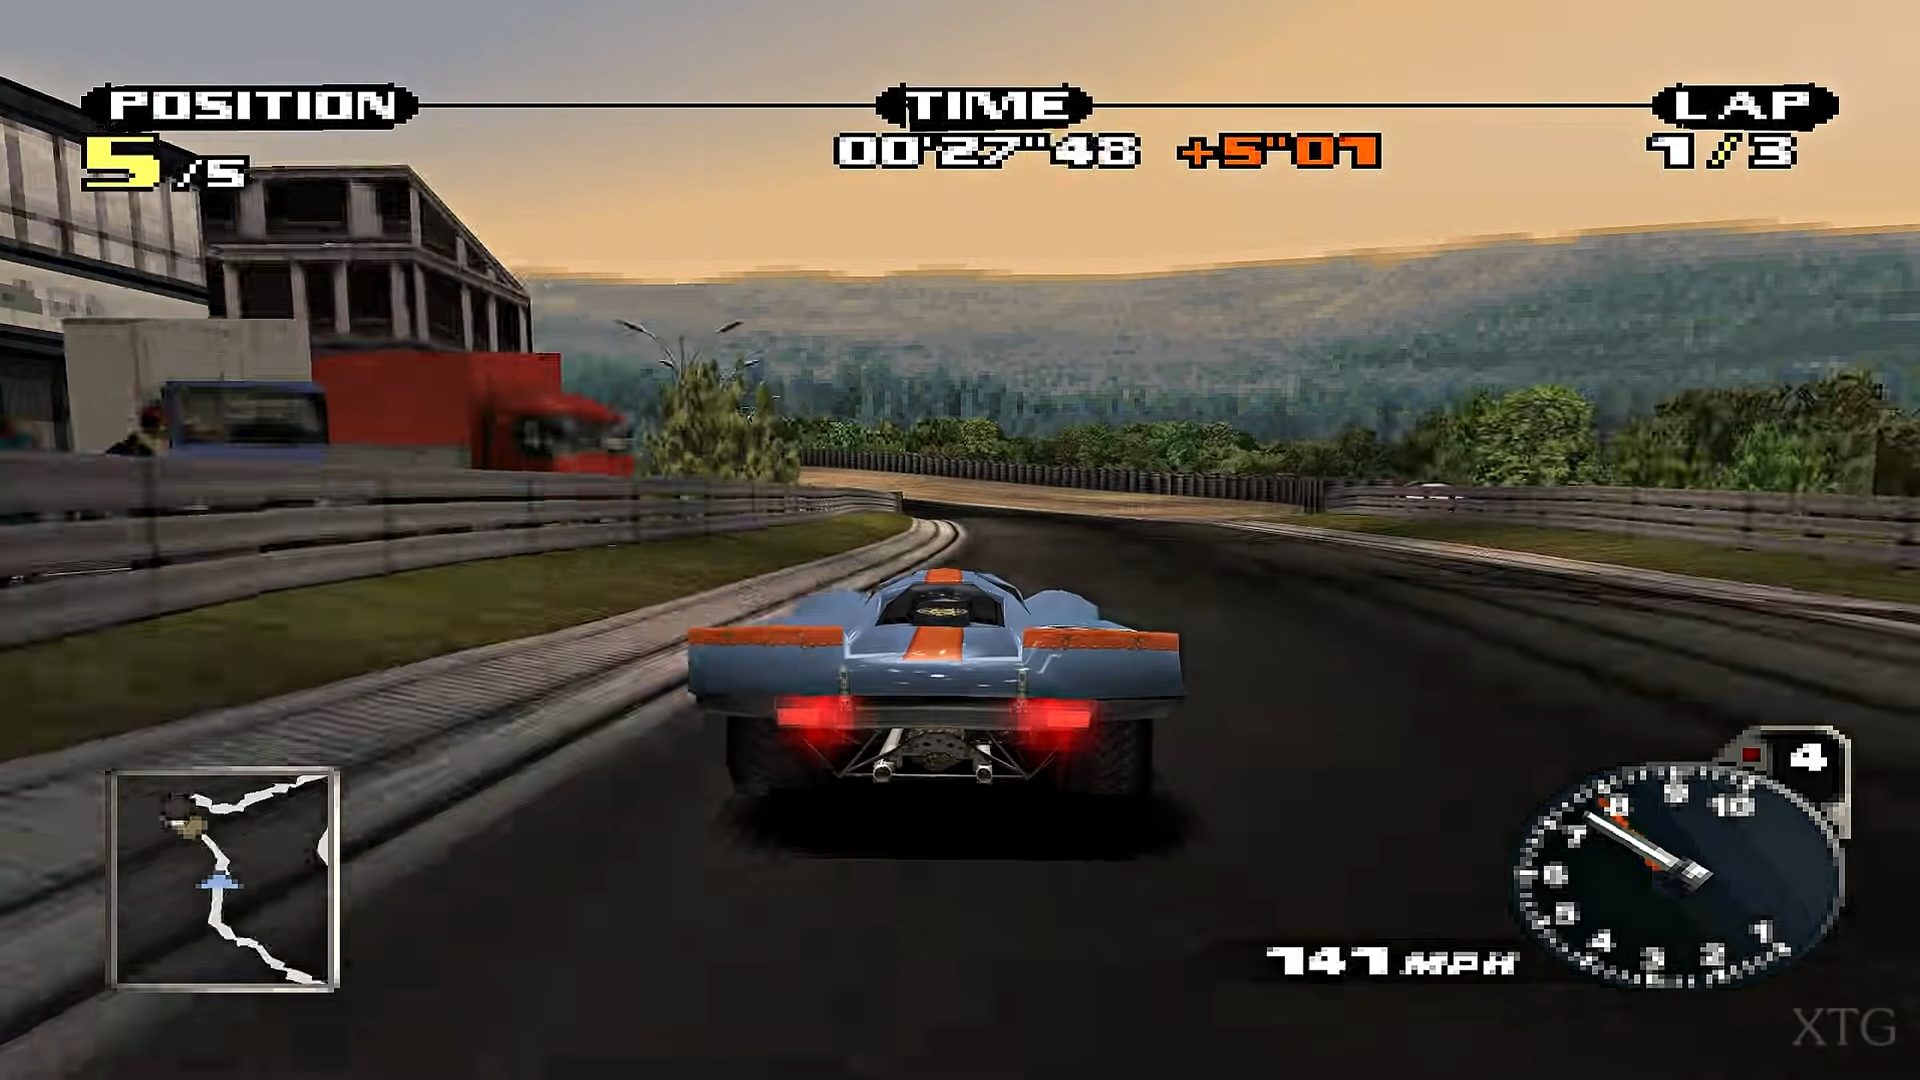  Need For Speed: Porsche Unleashed - PlayStation : Eden